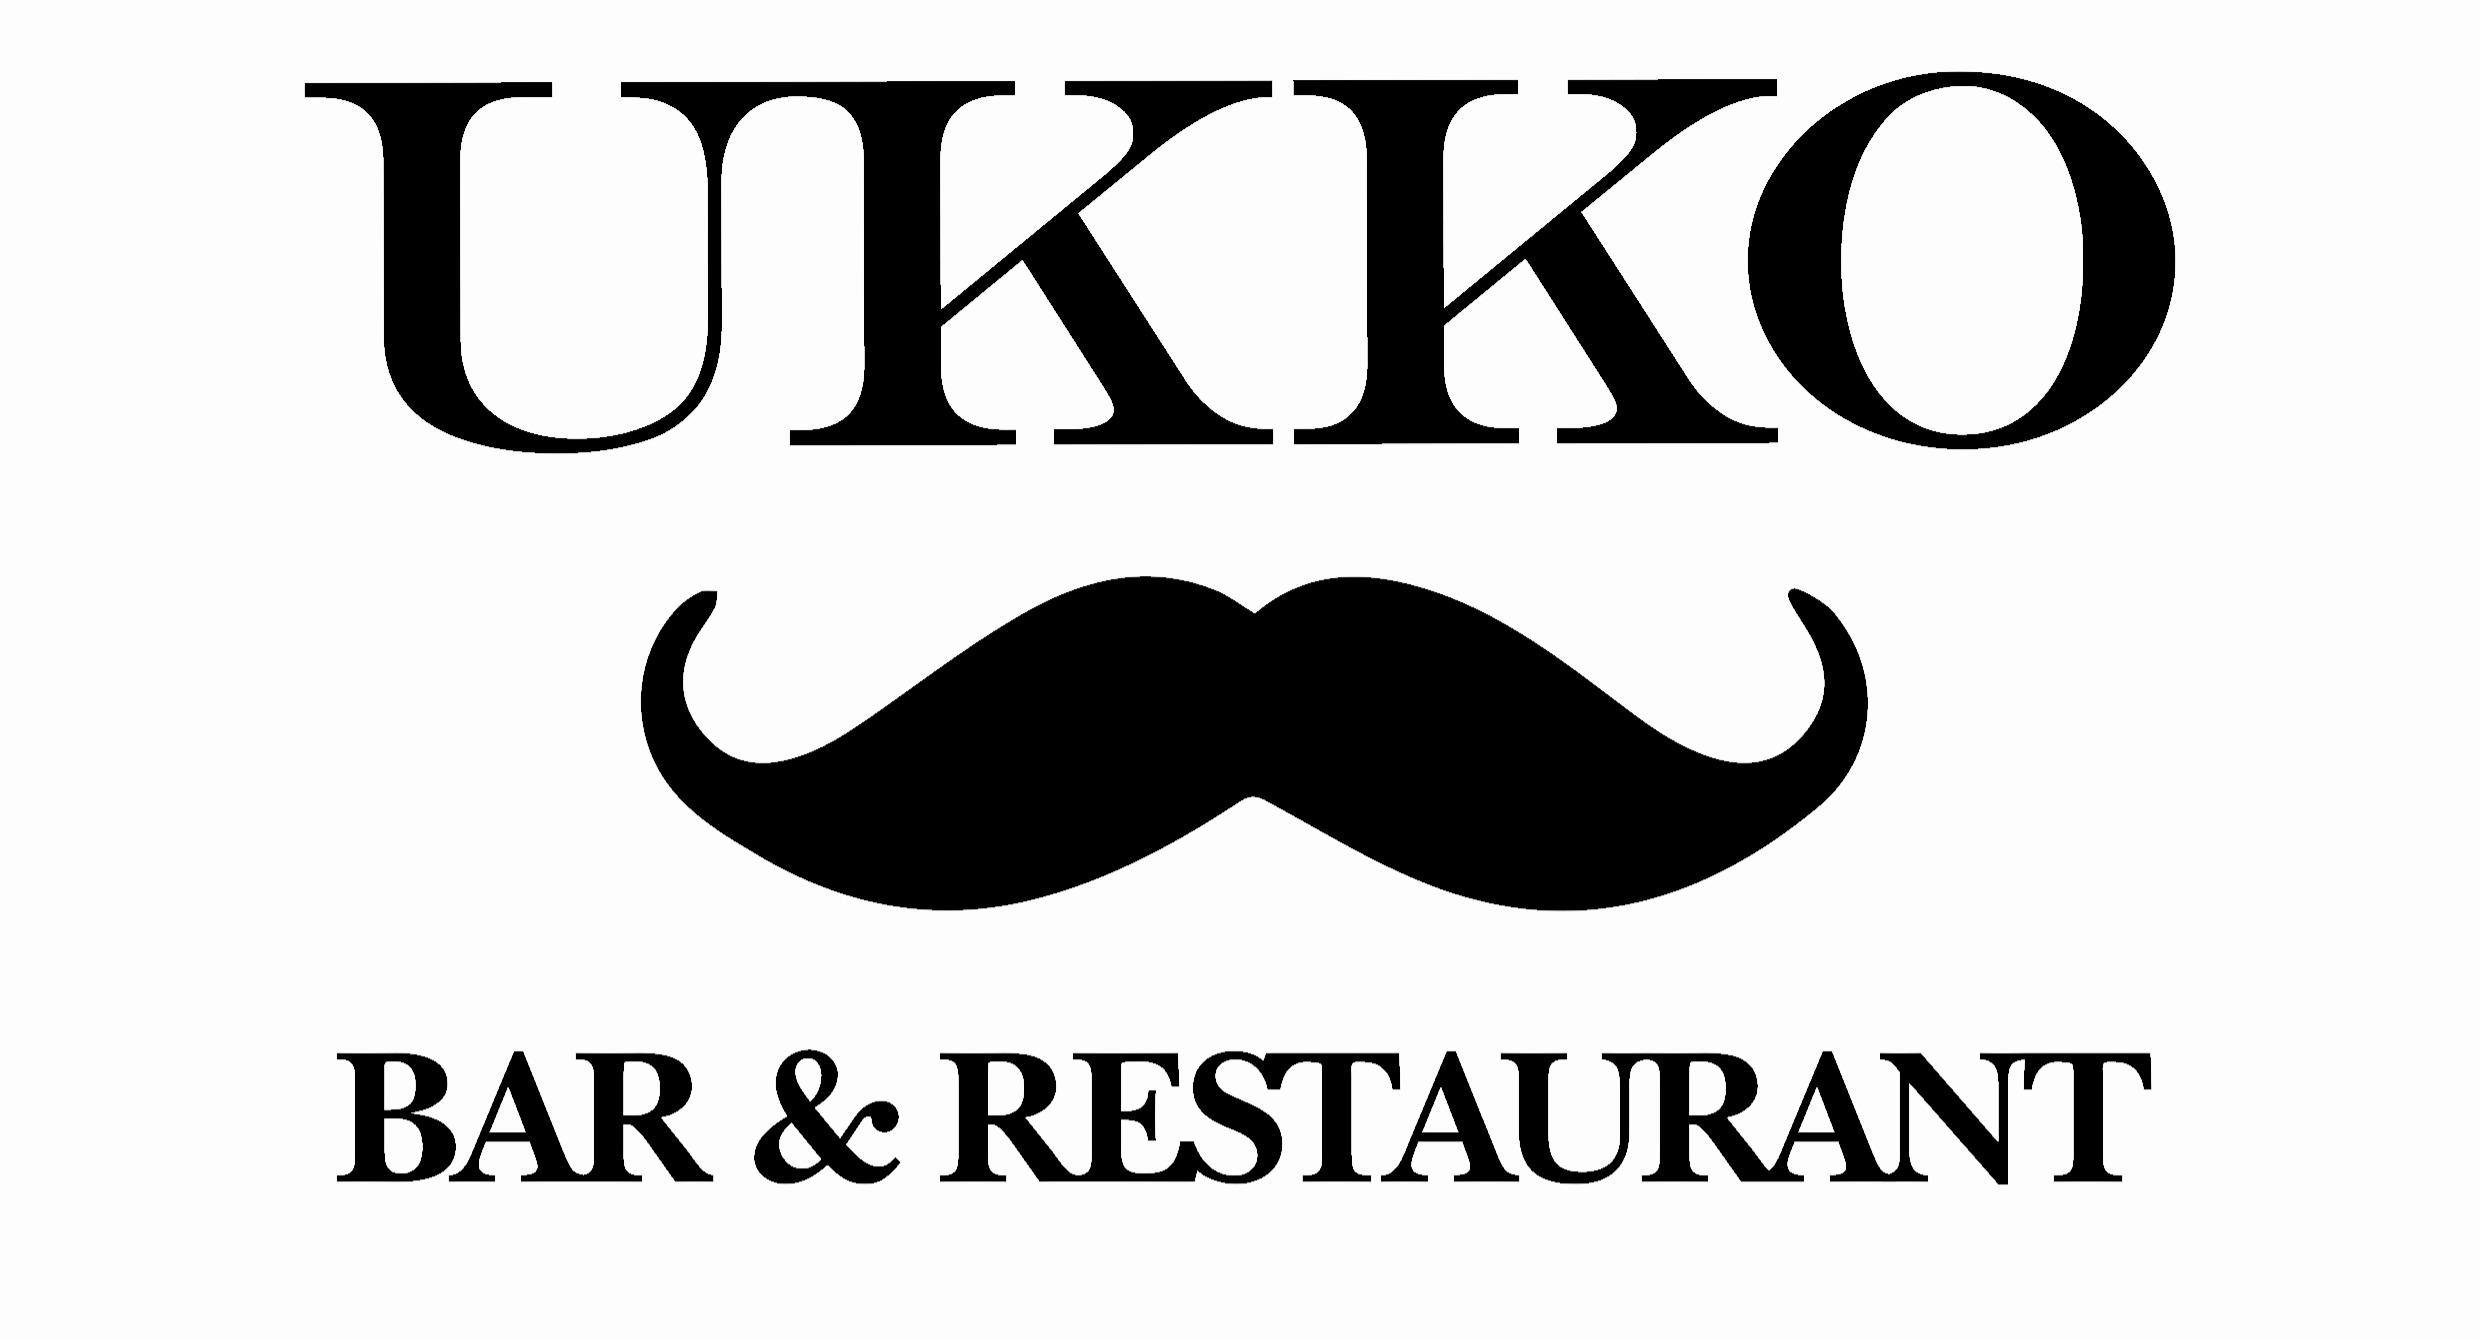 Photo of restaurant Bar & Restaurant Ukko in Tahko, Kuopio